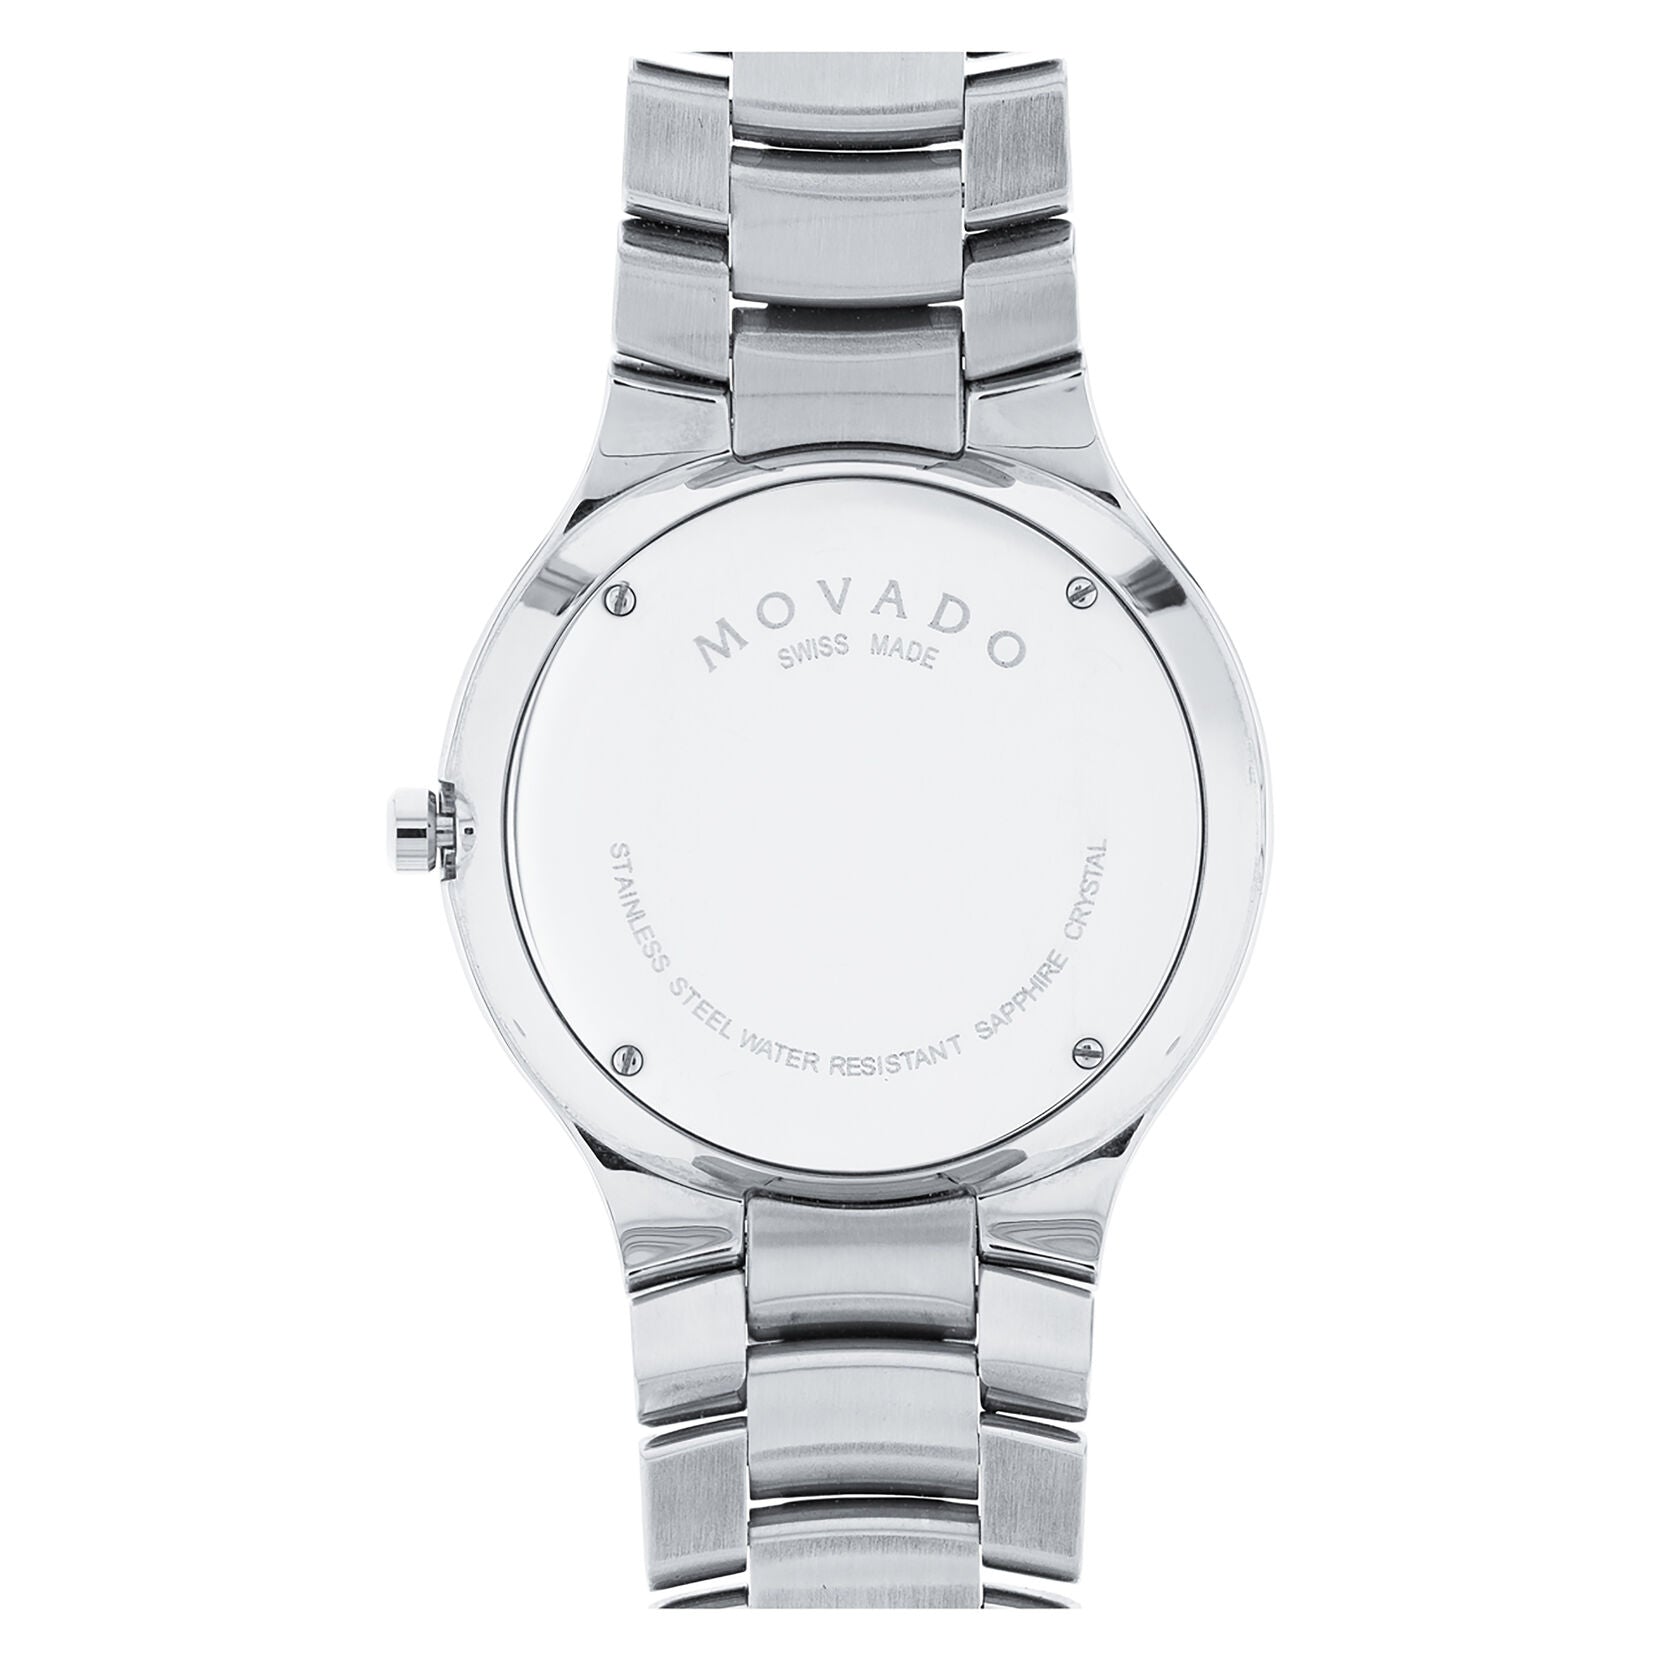 Movado Movado Serio Quartz Black with Concave Dot Dial Men's Watch 0606901